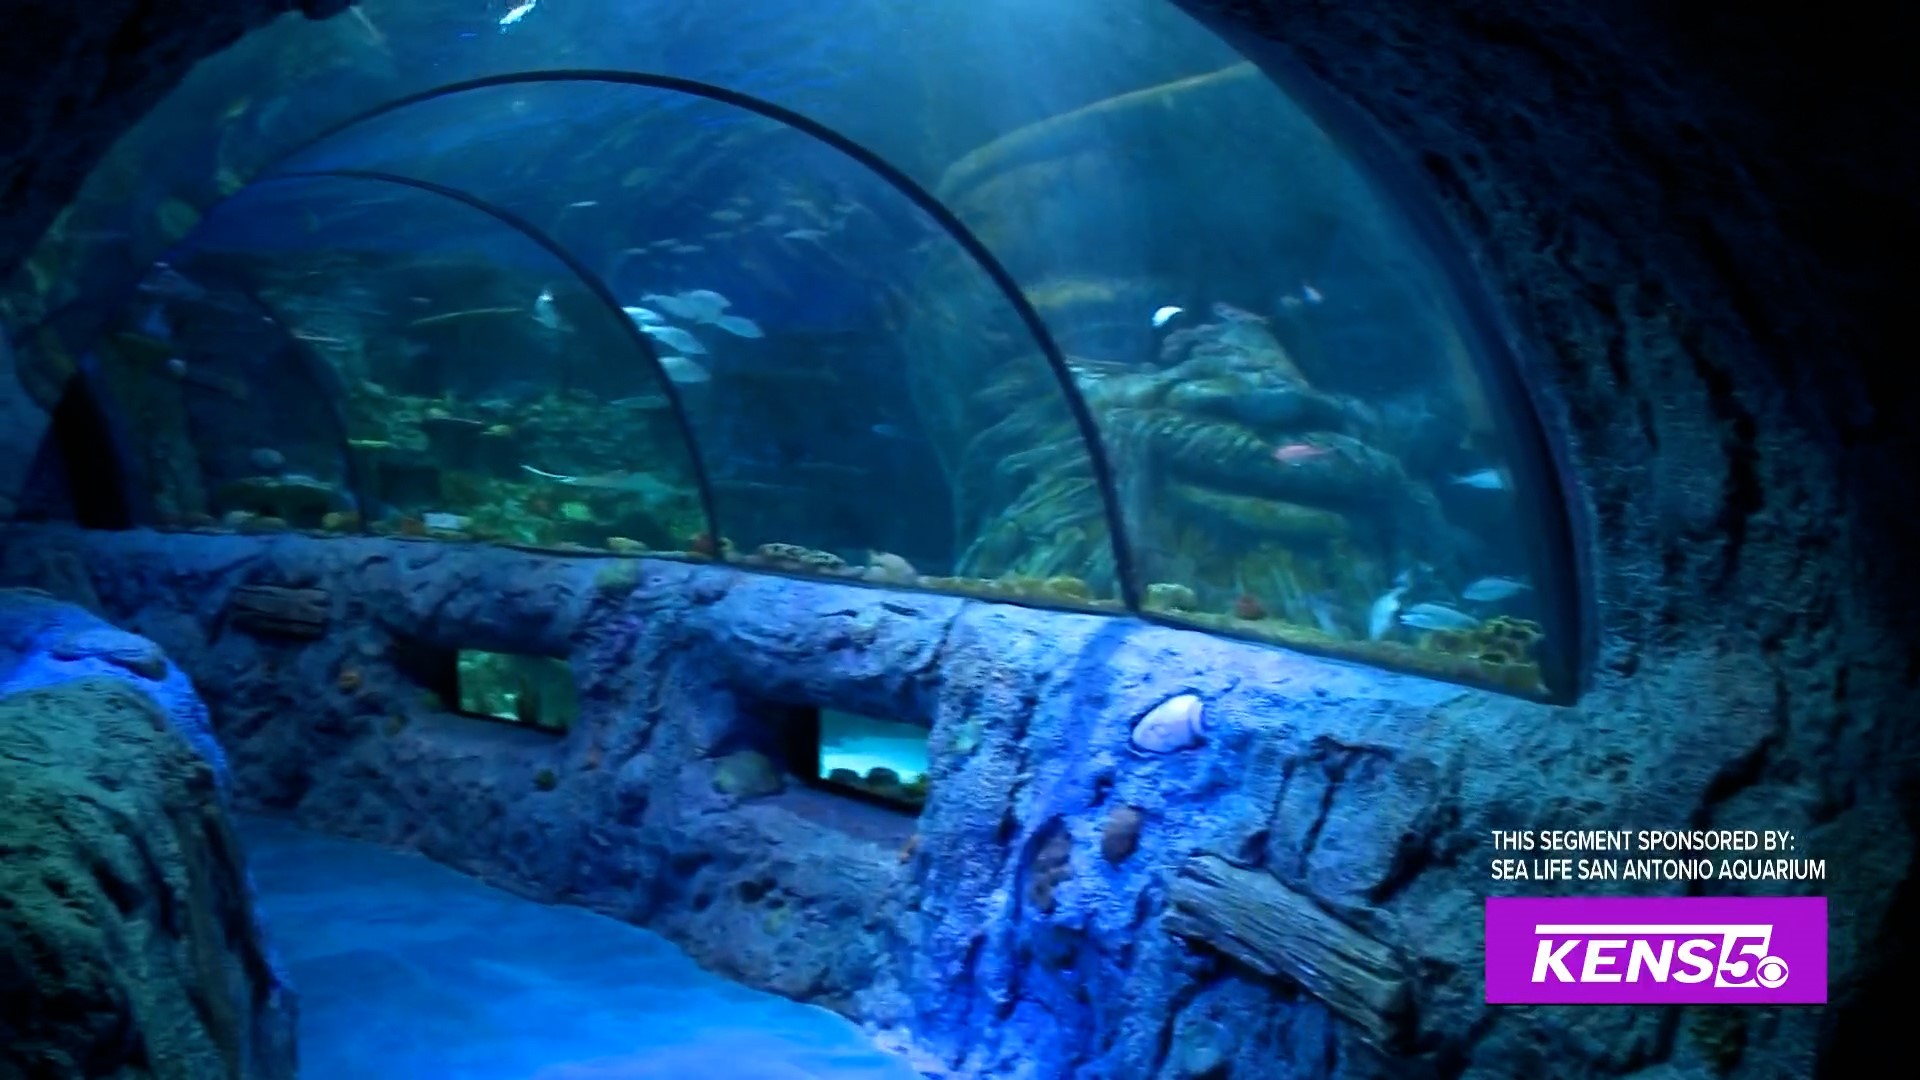 Sponsored by: Sea Life San Antonio Aquarium